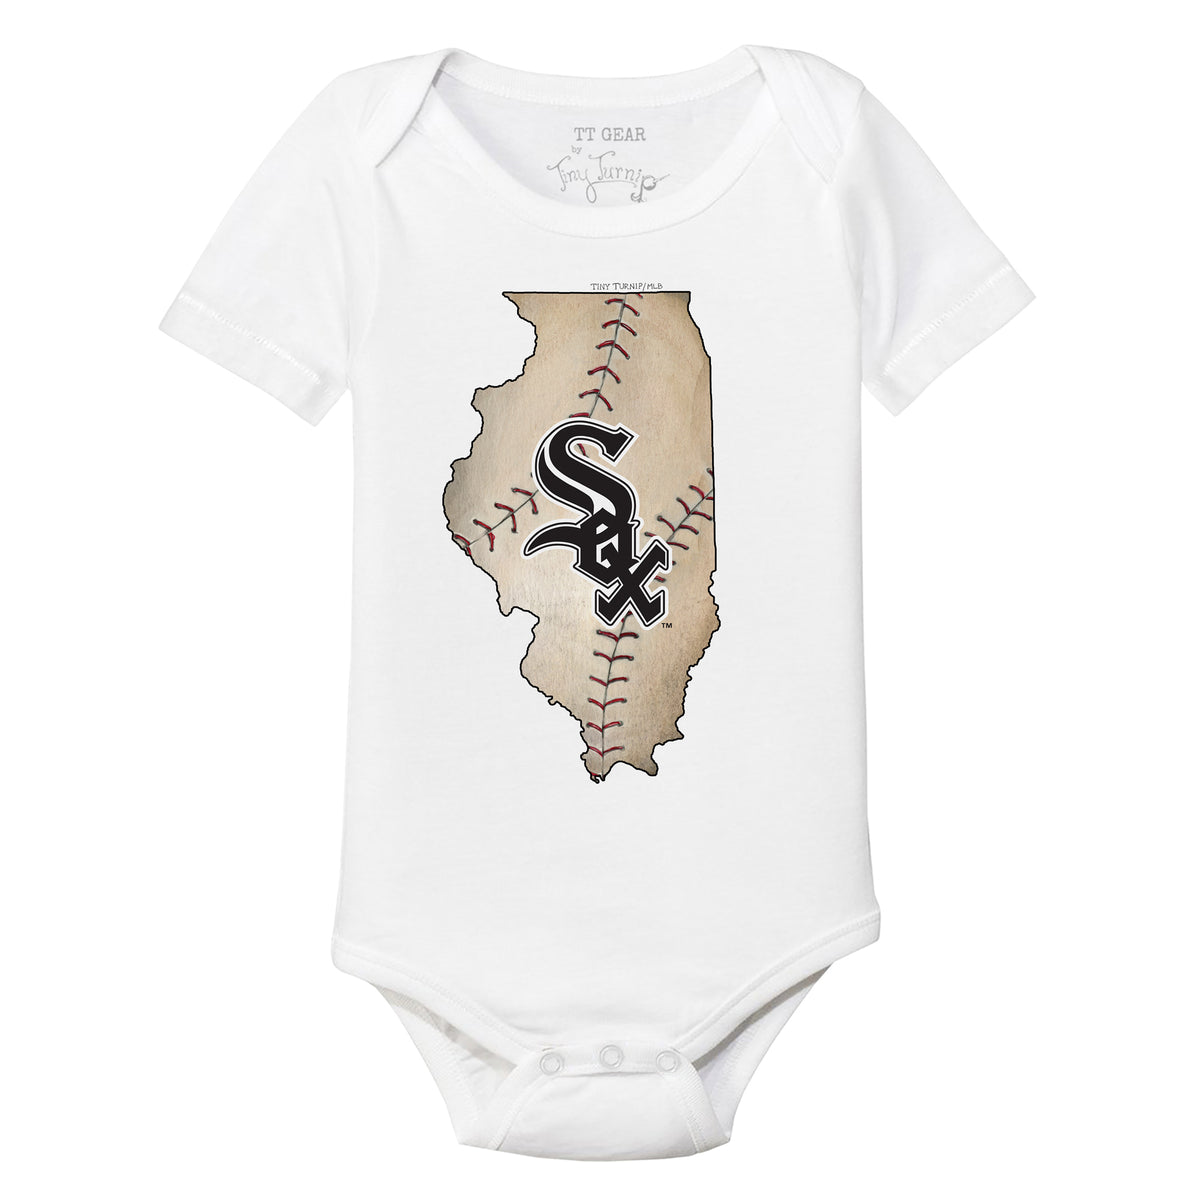 infant white sox apparel